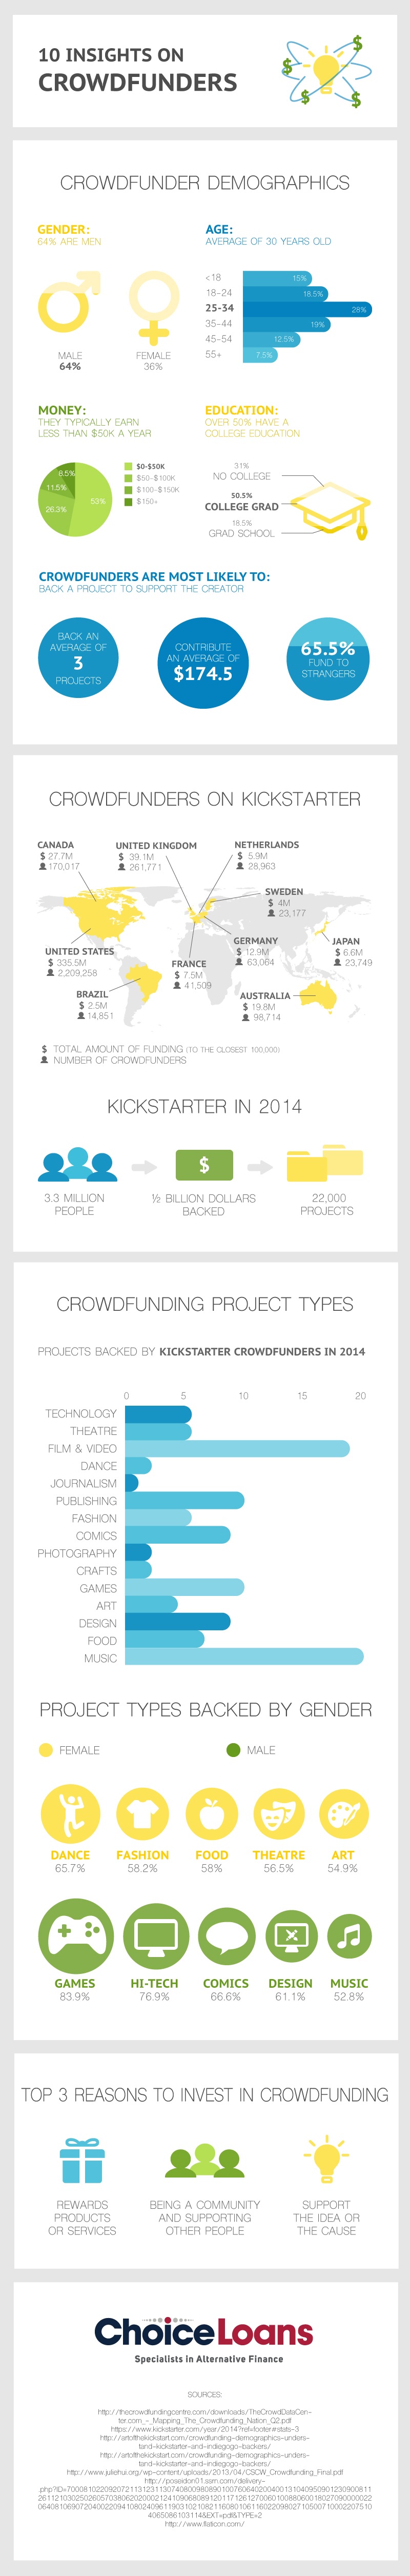 crowdfunders.jpg